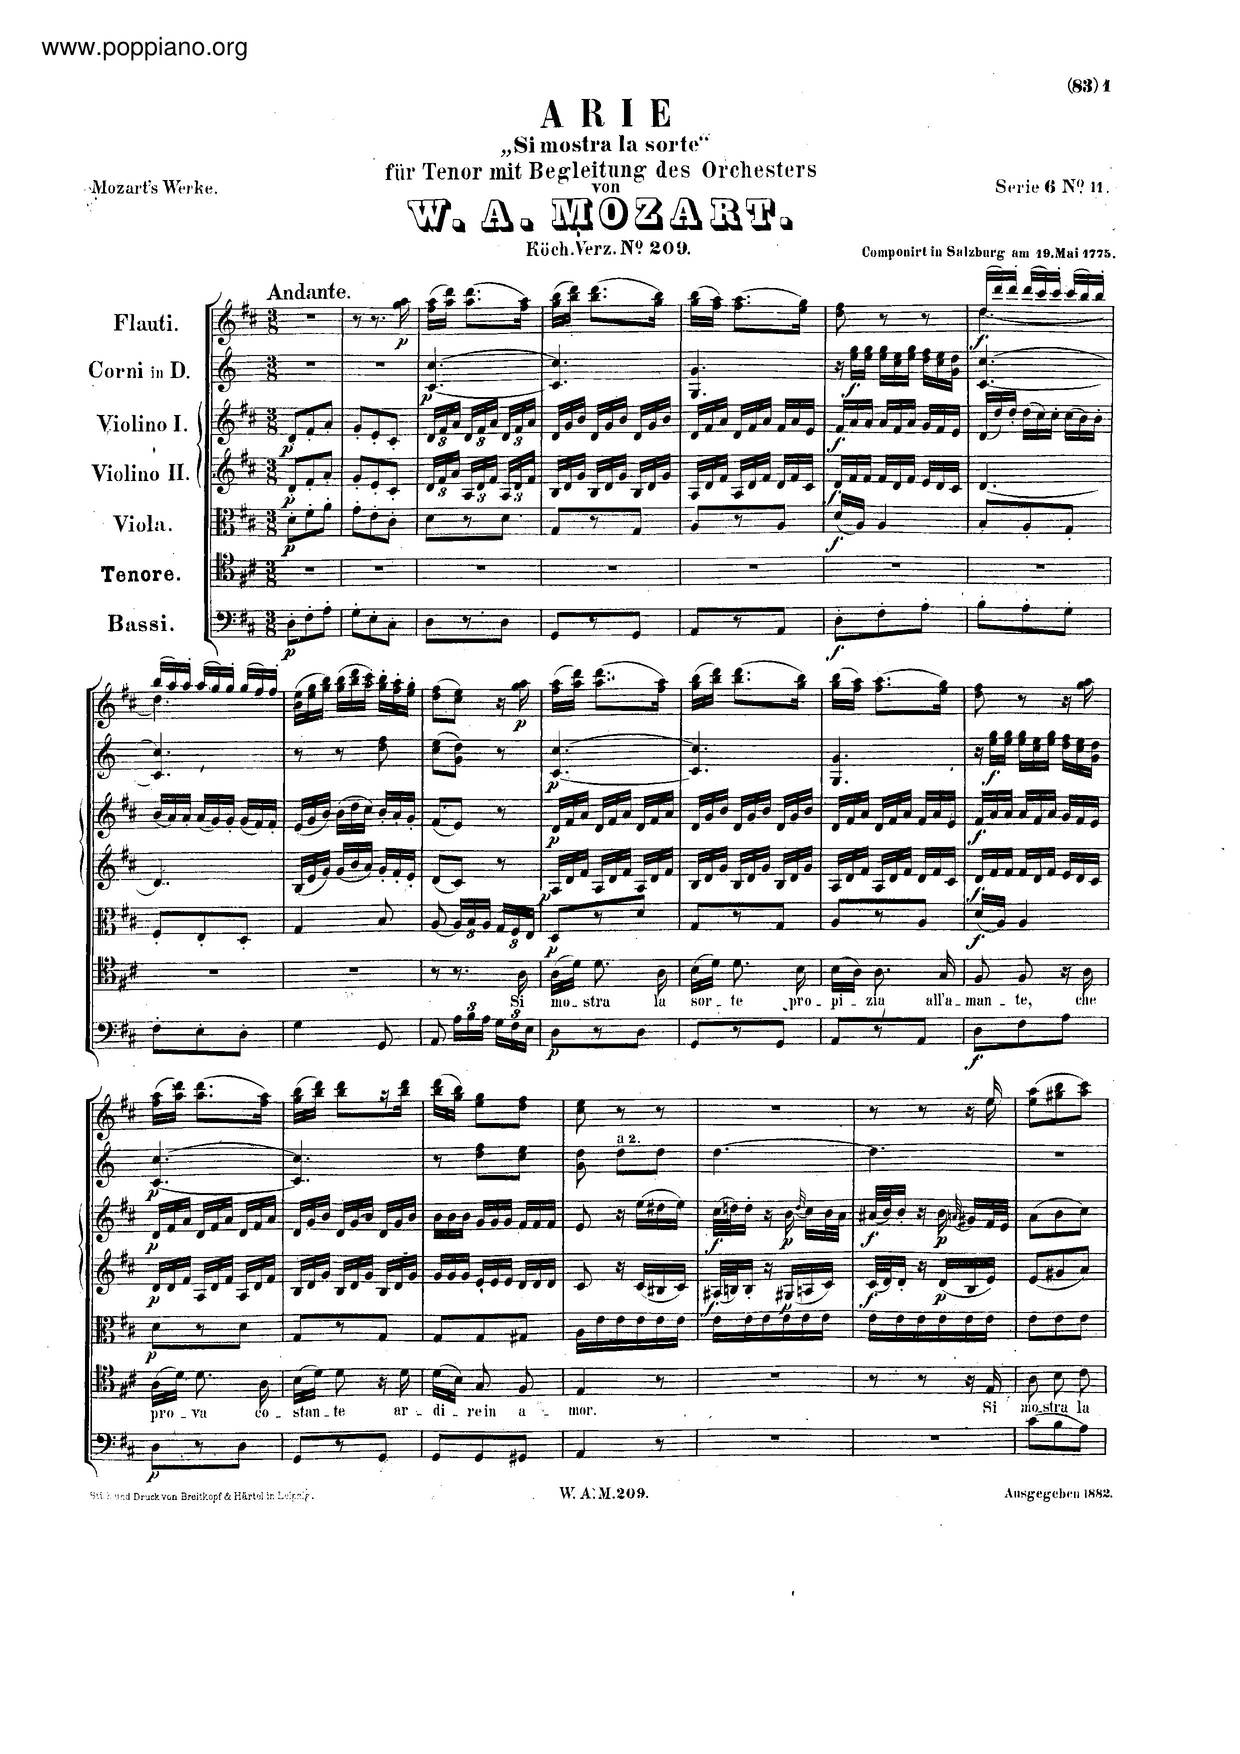 Si Mostra La Sorte, K. 209琴谱